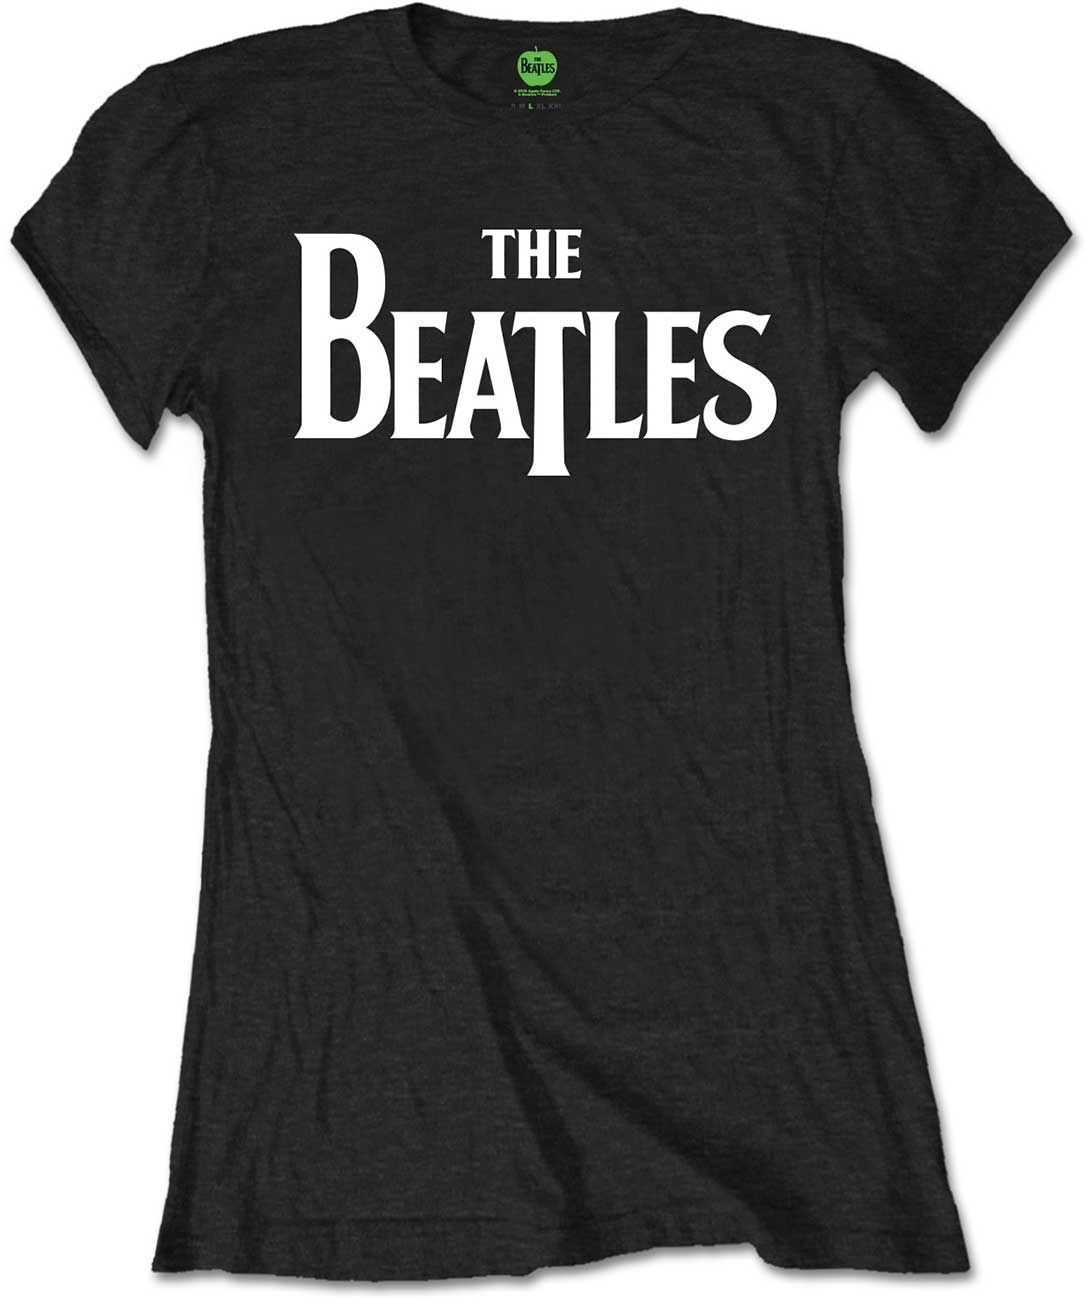 Shirt The Beatles Shirt Drop T Logo Black (Retail Pack) Black XL